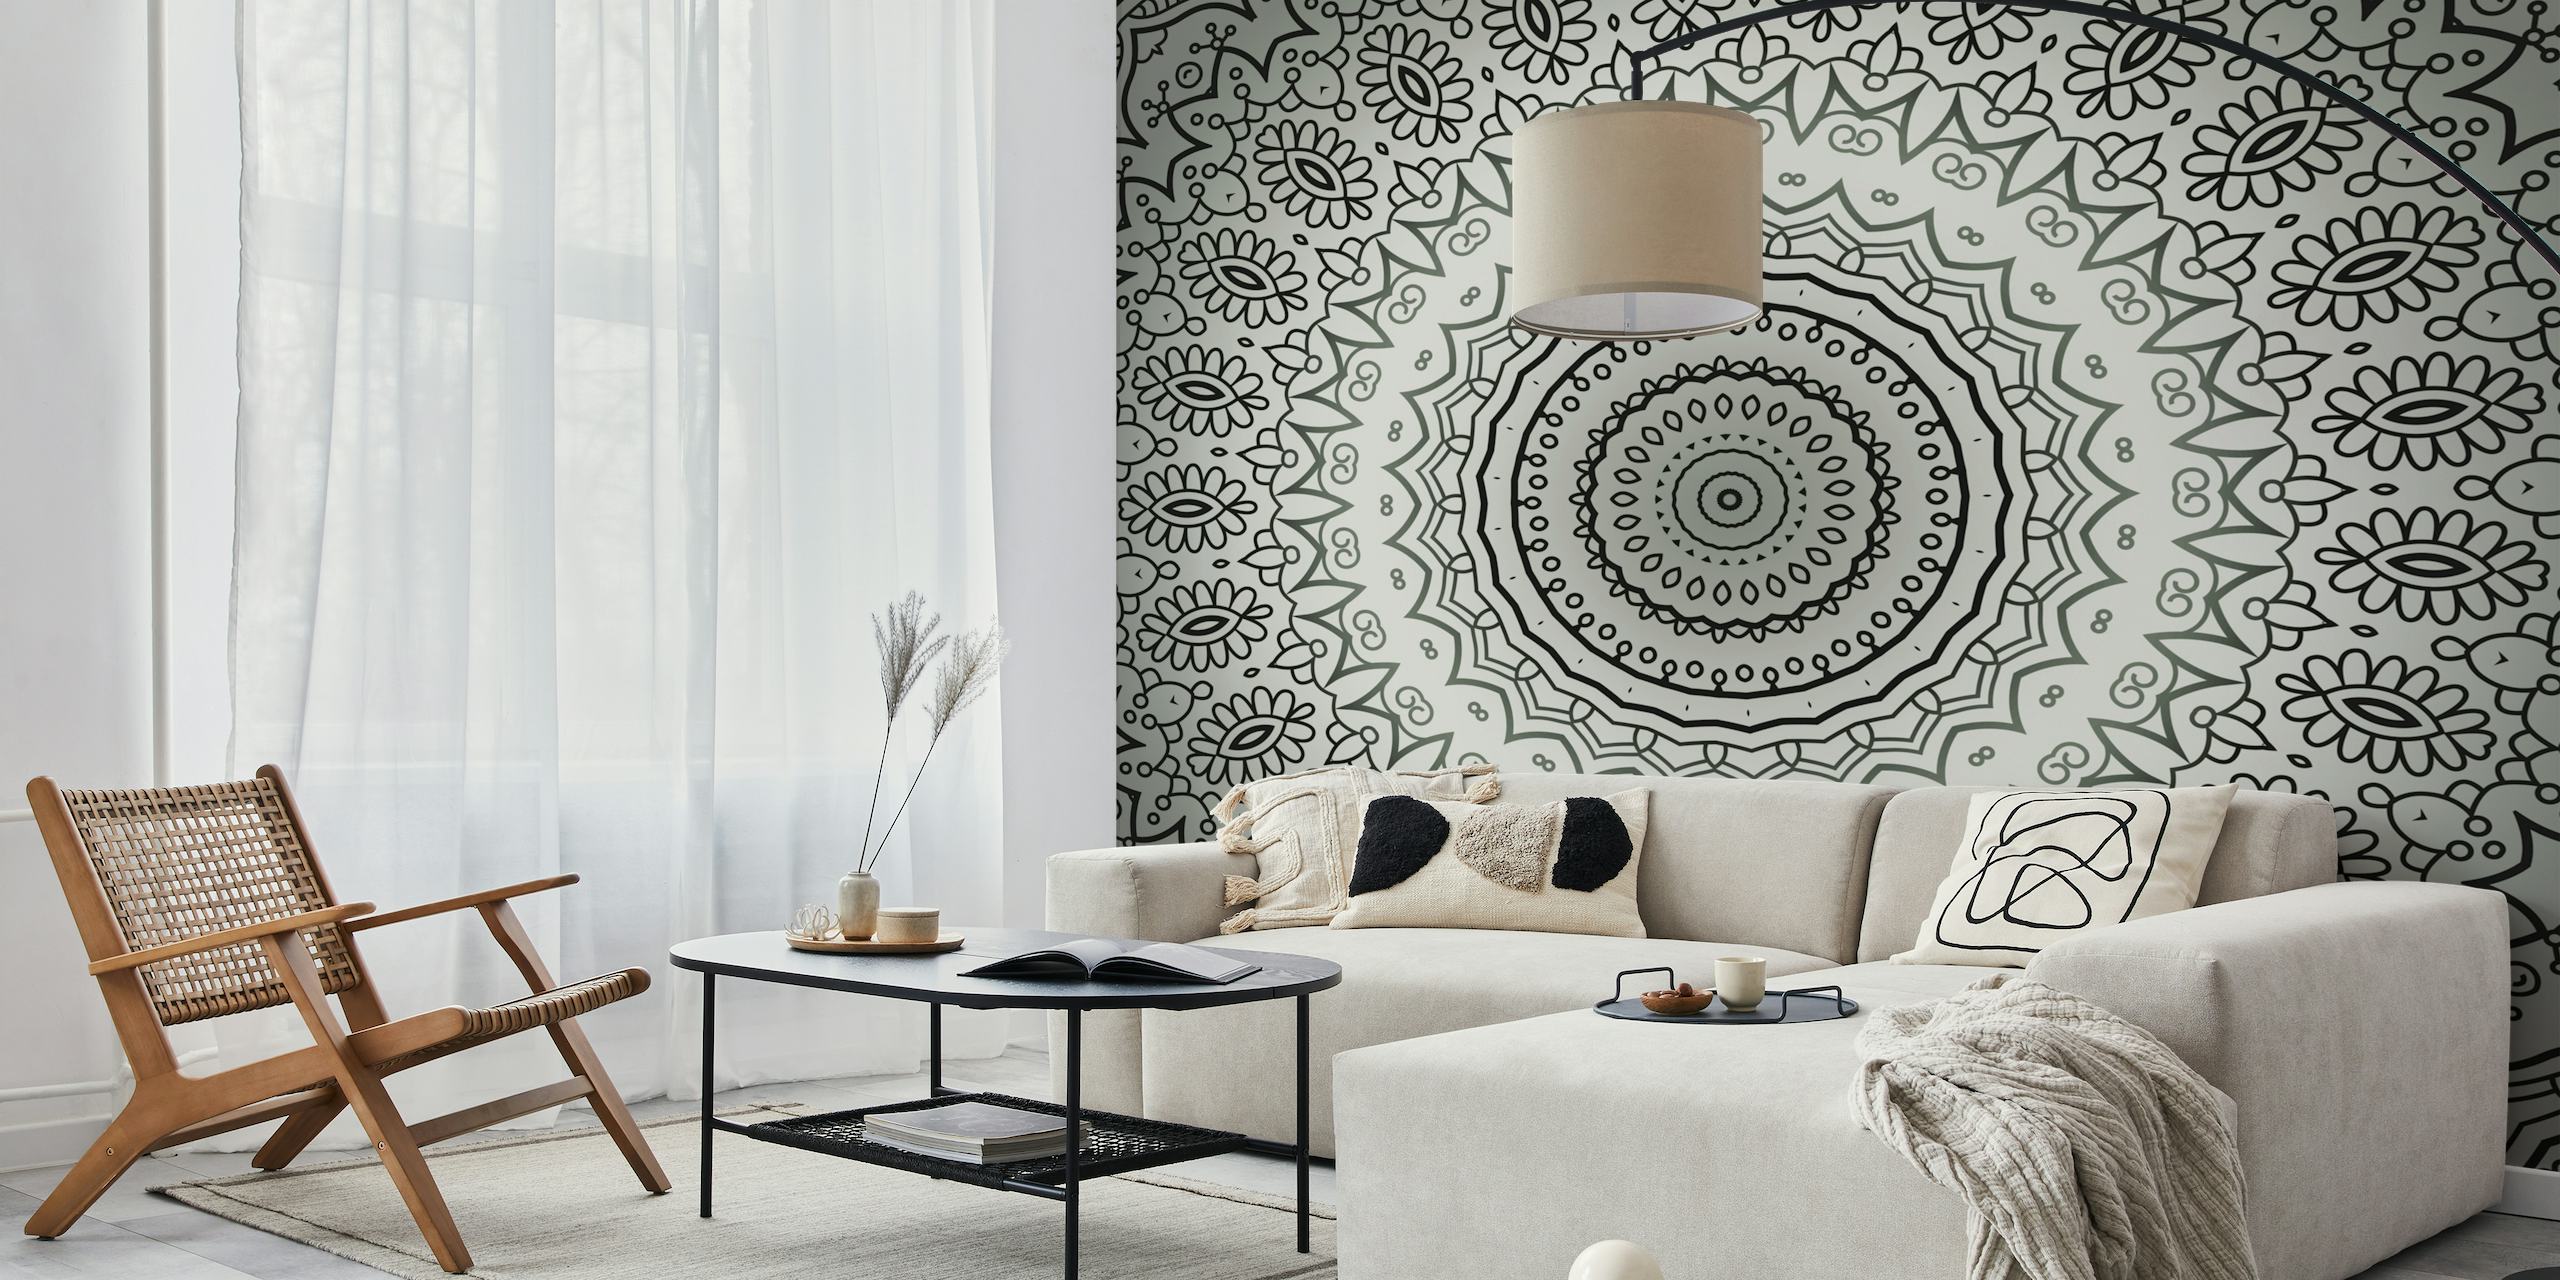 Elegantes Mandala-Wandbild in Grautönen mit komplizierten Mustern